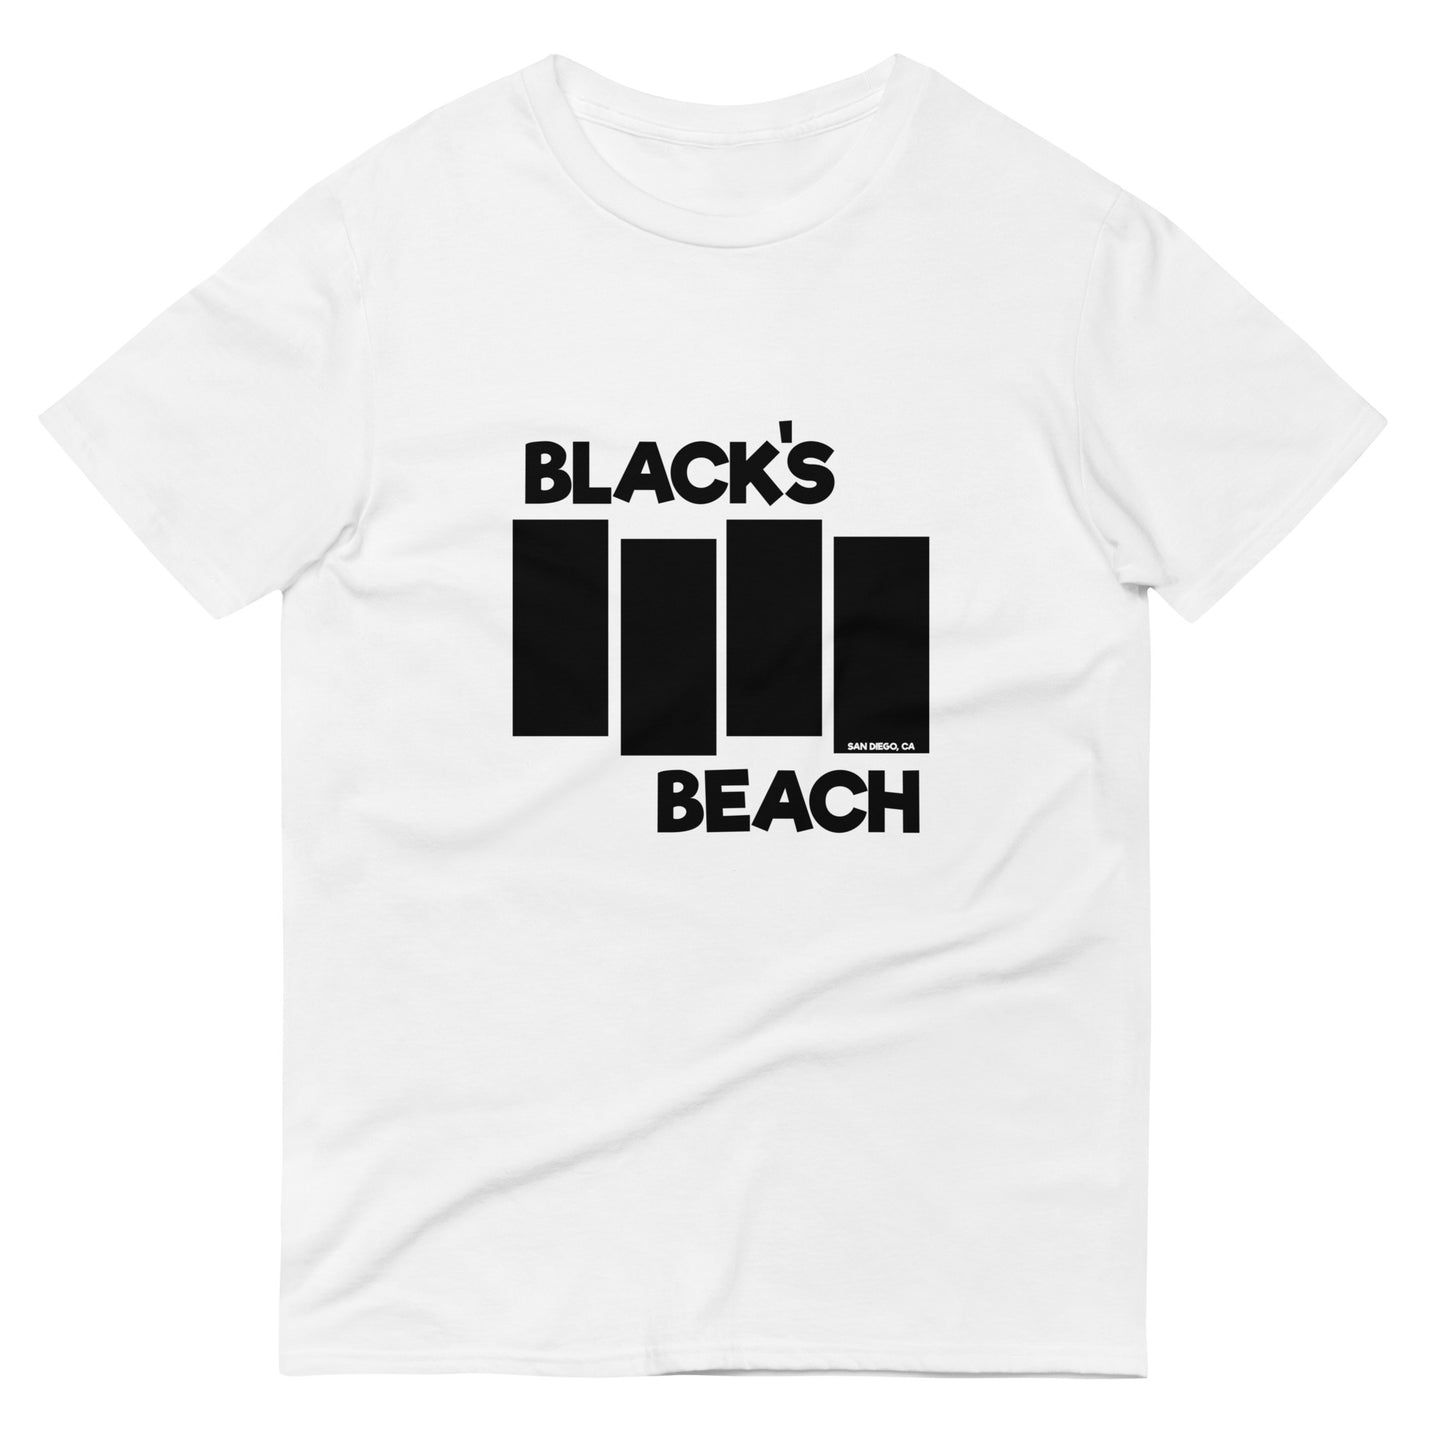 Black's Beach Tees / Style 03 / Short-Sleeve T-Shirt / Black Flag Tribute